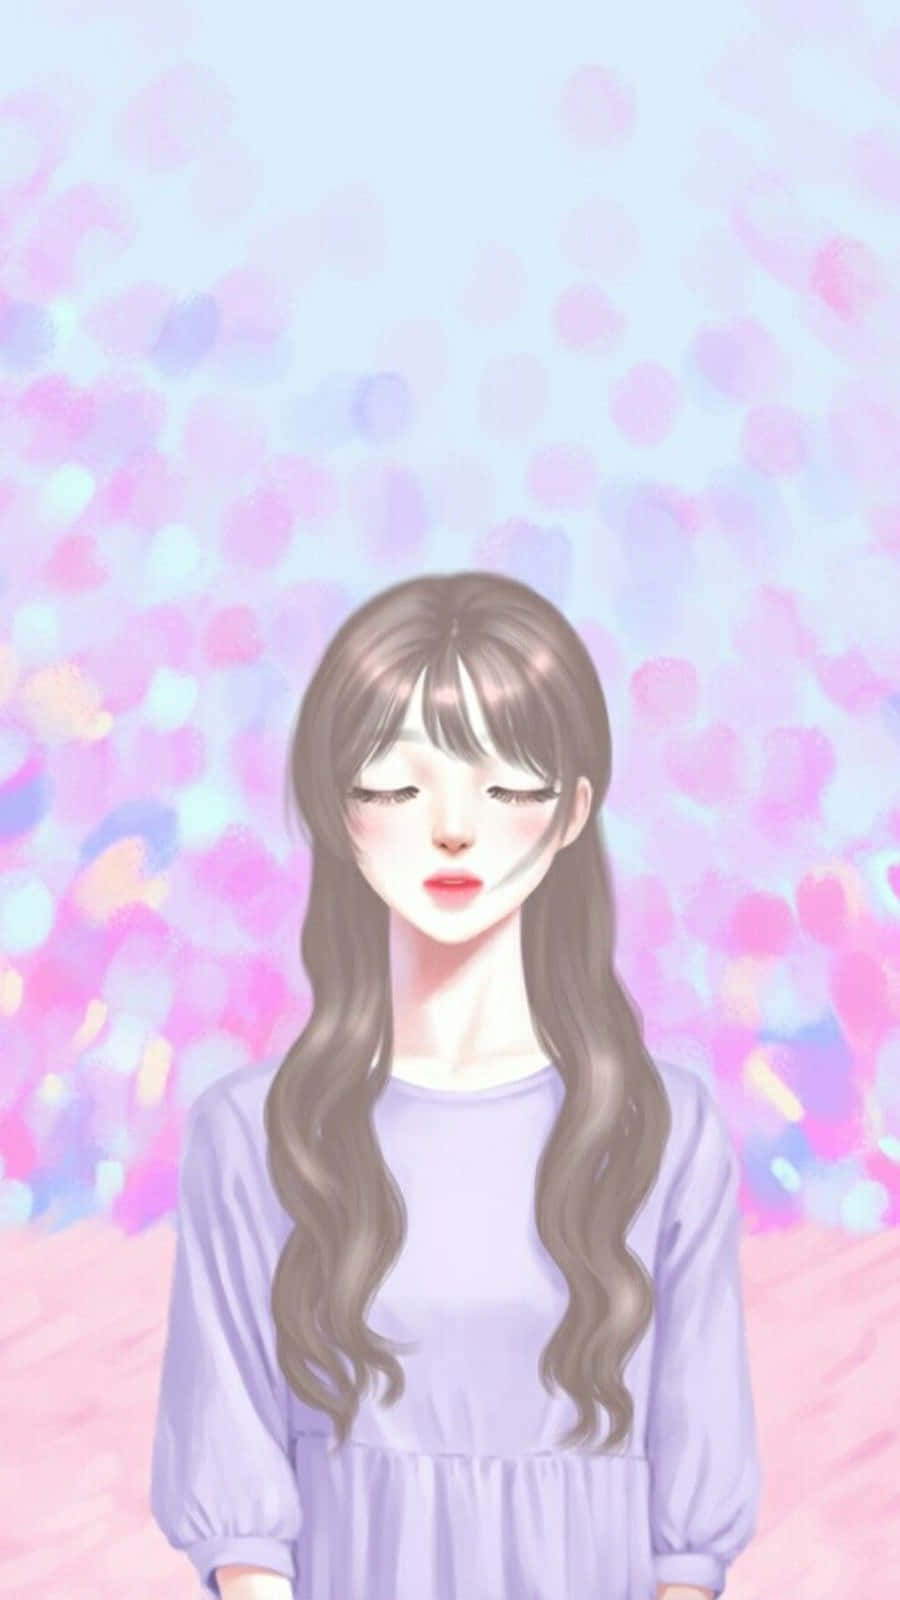 Korean Anime Girl Wearing Lavender Top Background